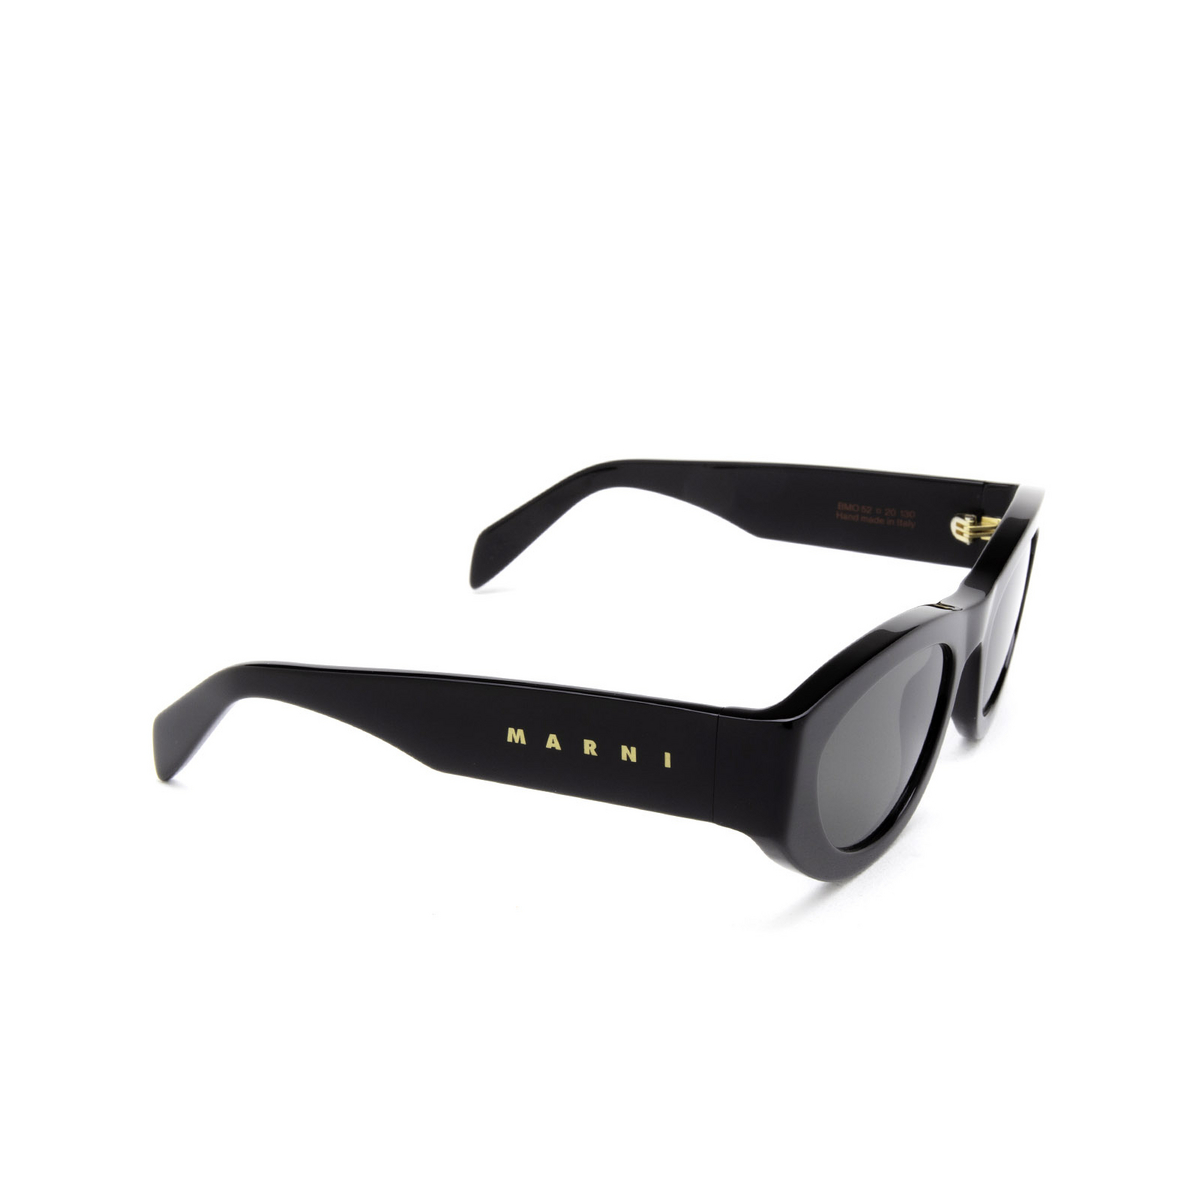 Marni RAINBOW MOUNTAINS Sunglasses BMO Black - three-quarters view